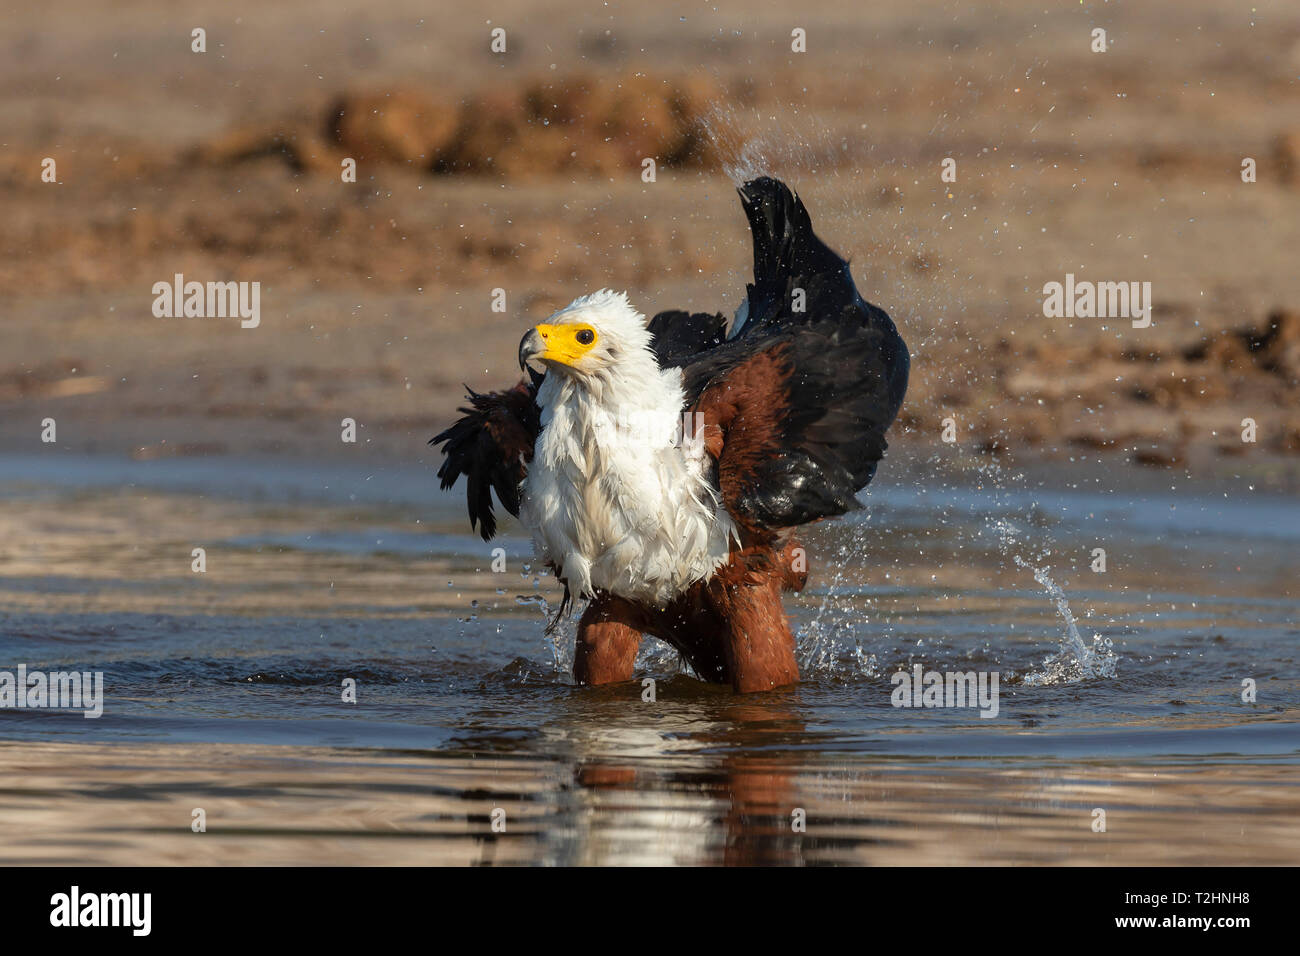 Águila pescadora africana, Haliaeetus vocifer, bañarse, el río Chobe, Botswana, África austral Foto de stock